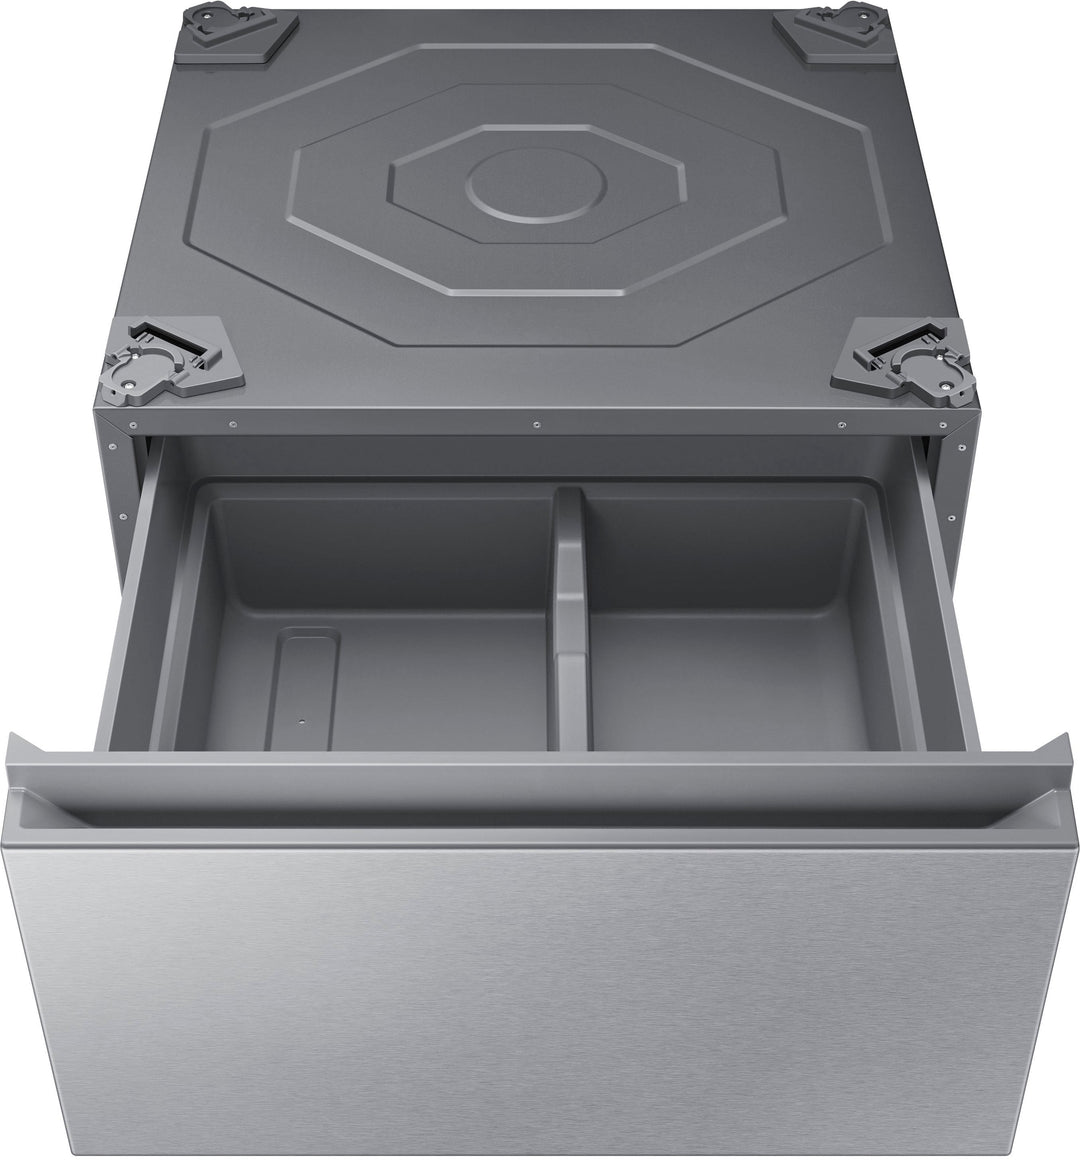 Samsung - Bespoke 27-in Laundry Pedestal with Storage Drawer - Silver steel_3